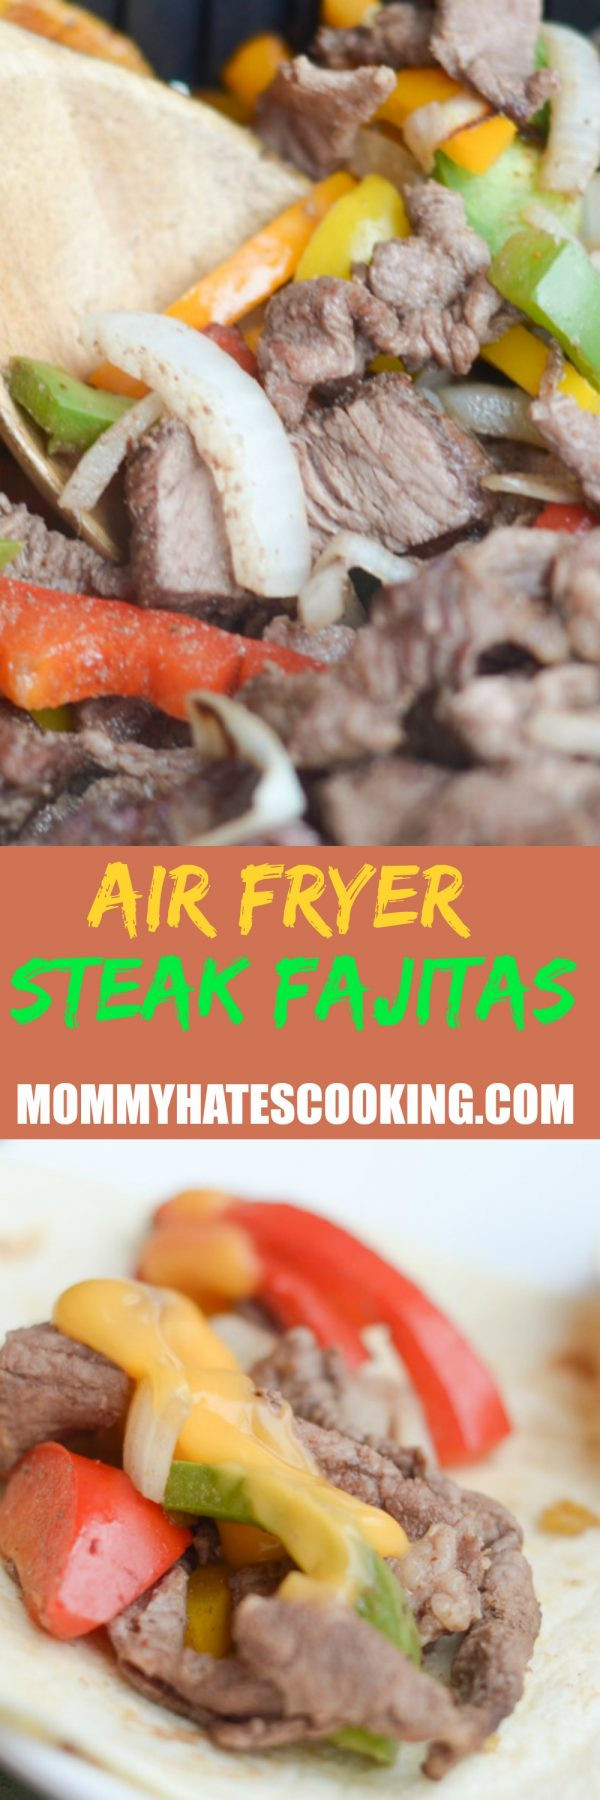 Air Fryer Fajitas
 Air Fryer Steak Fajitas with ions and Peppers Mommy